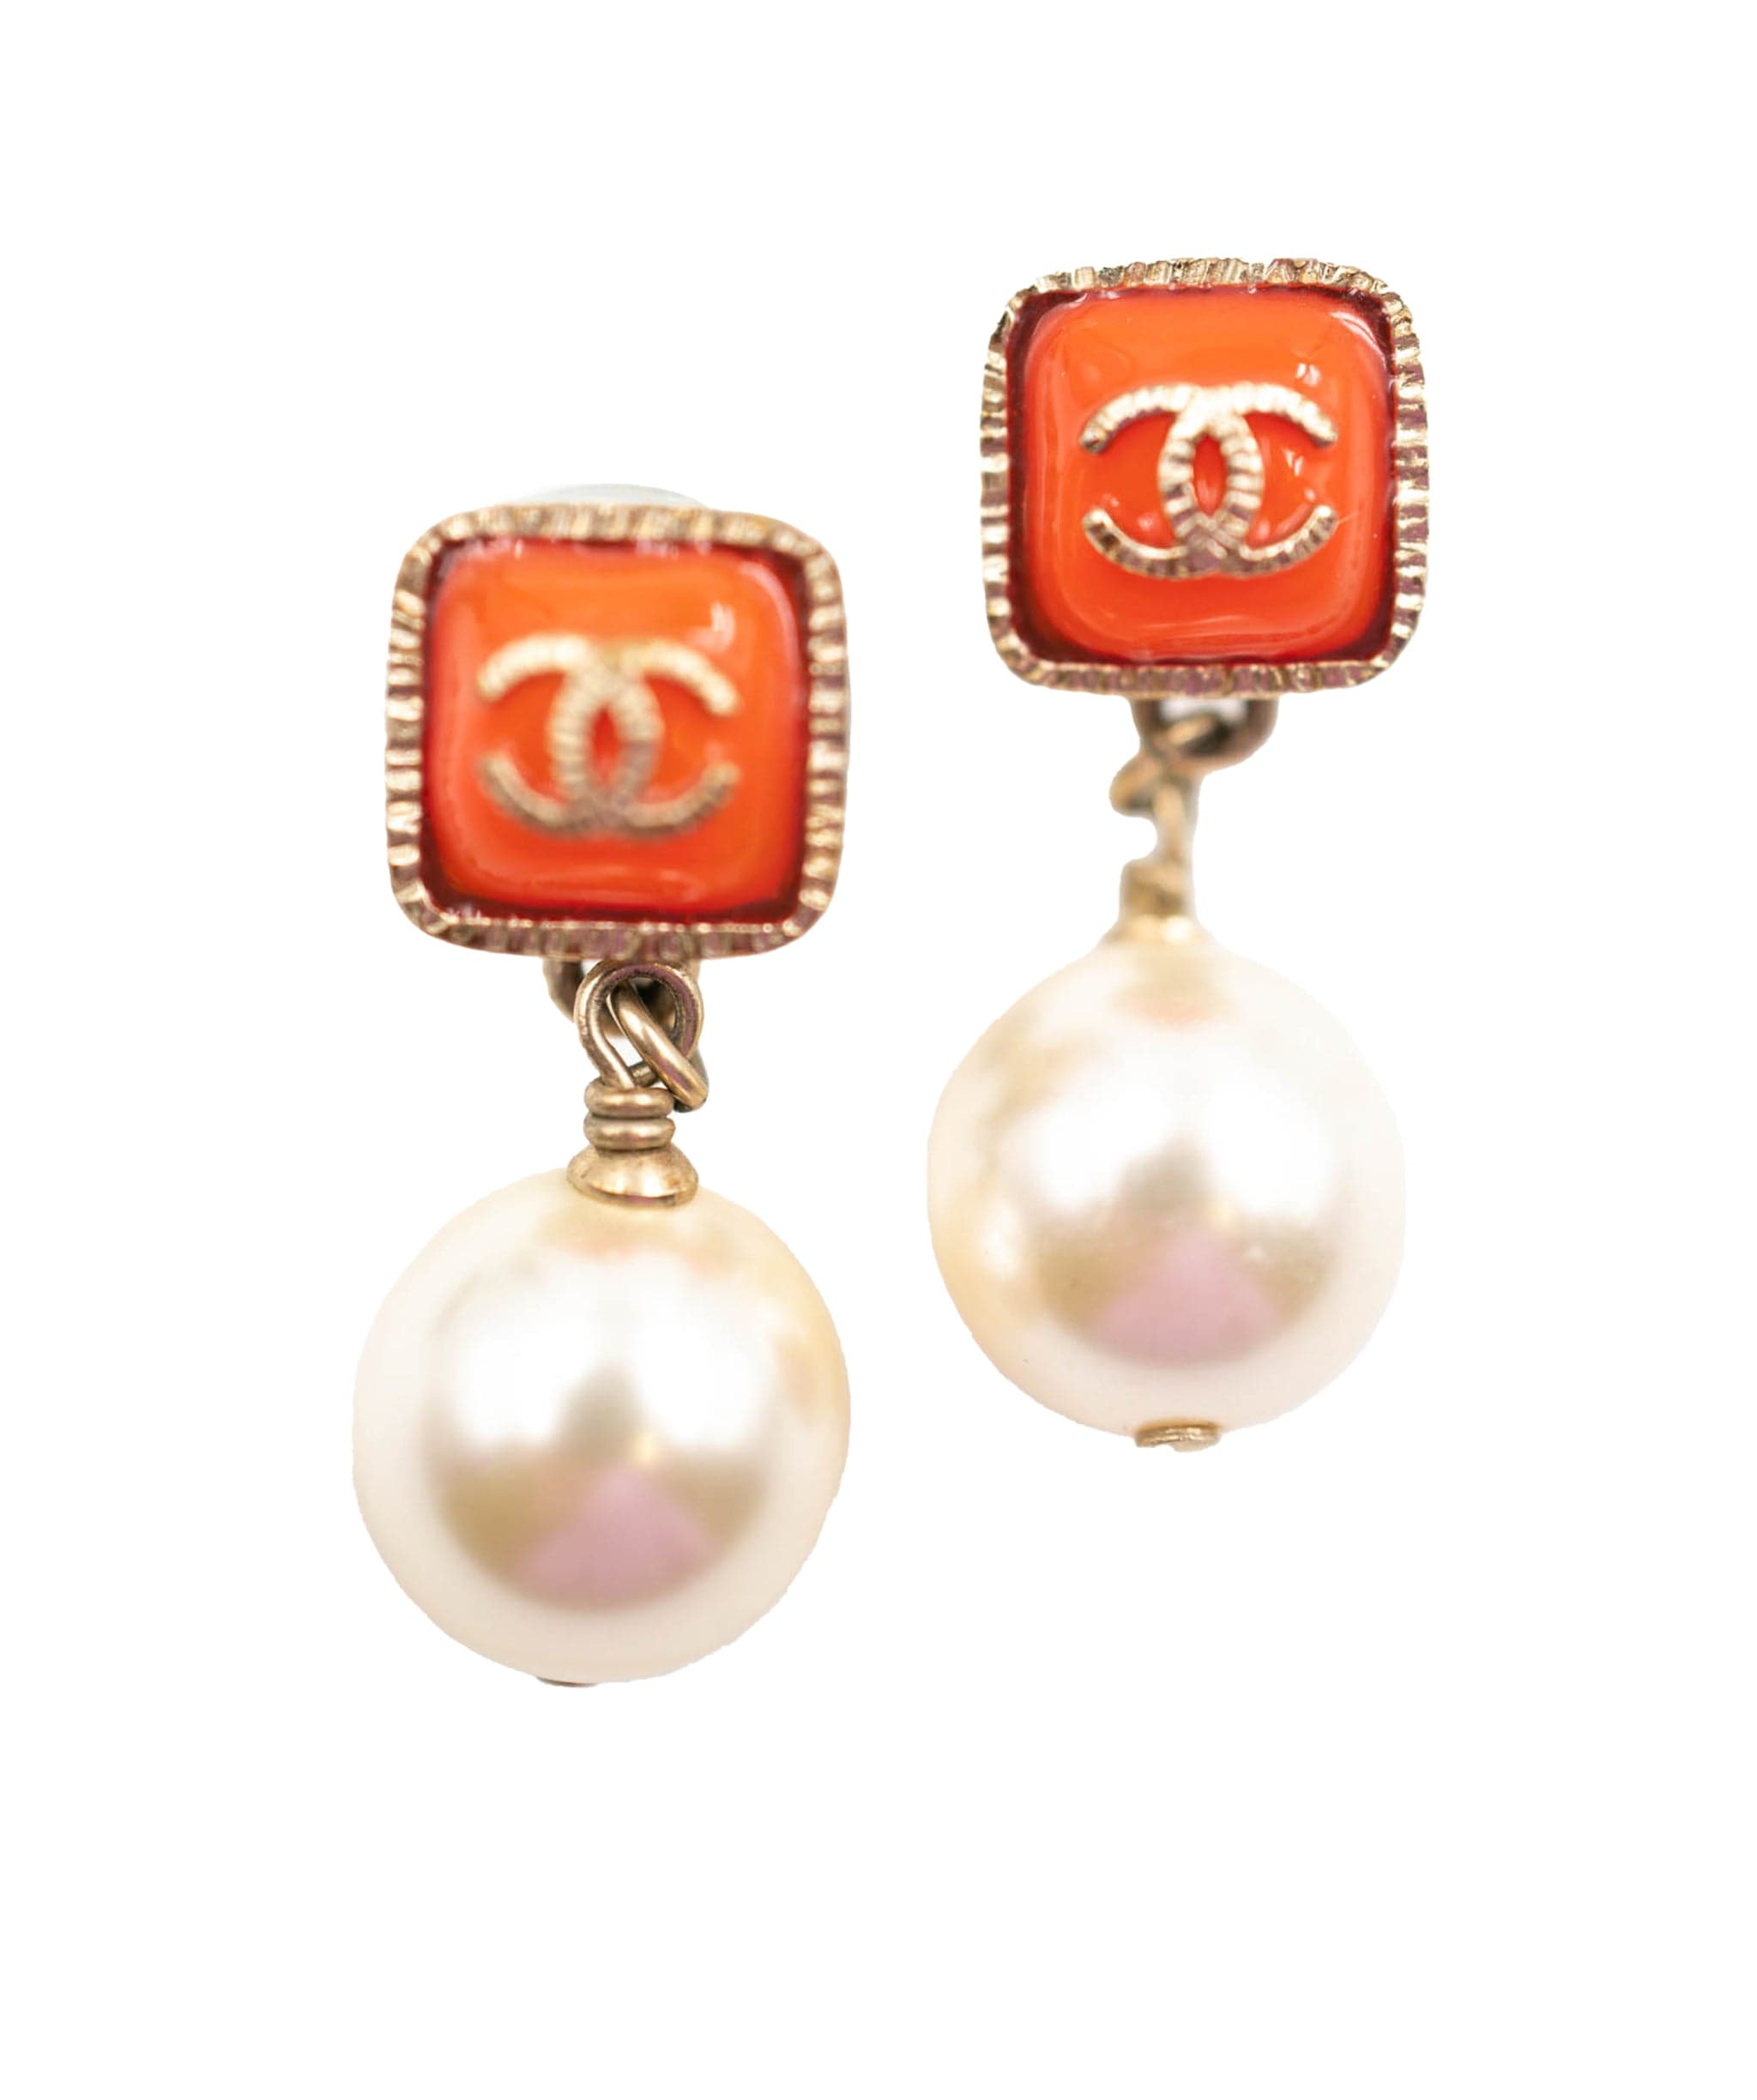 Chanel Chanel White and Orange Earrings RJL1538